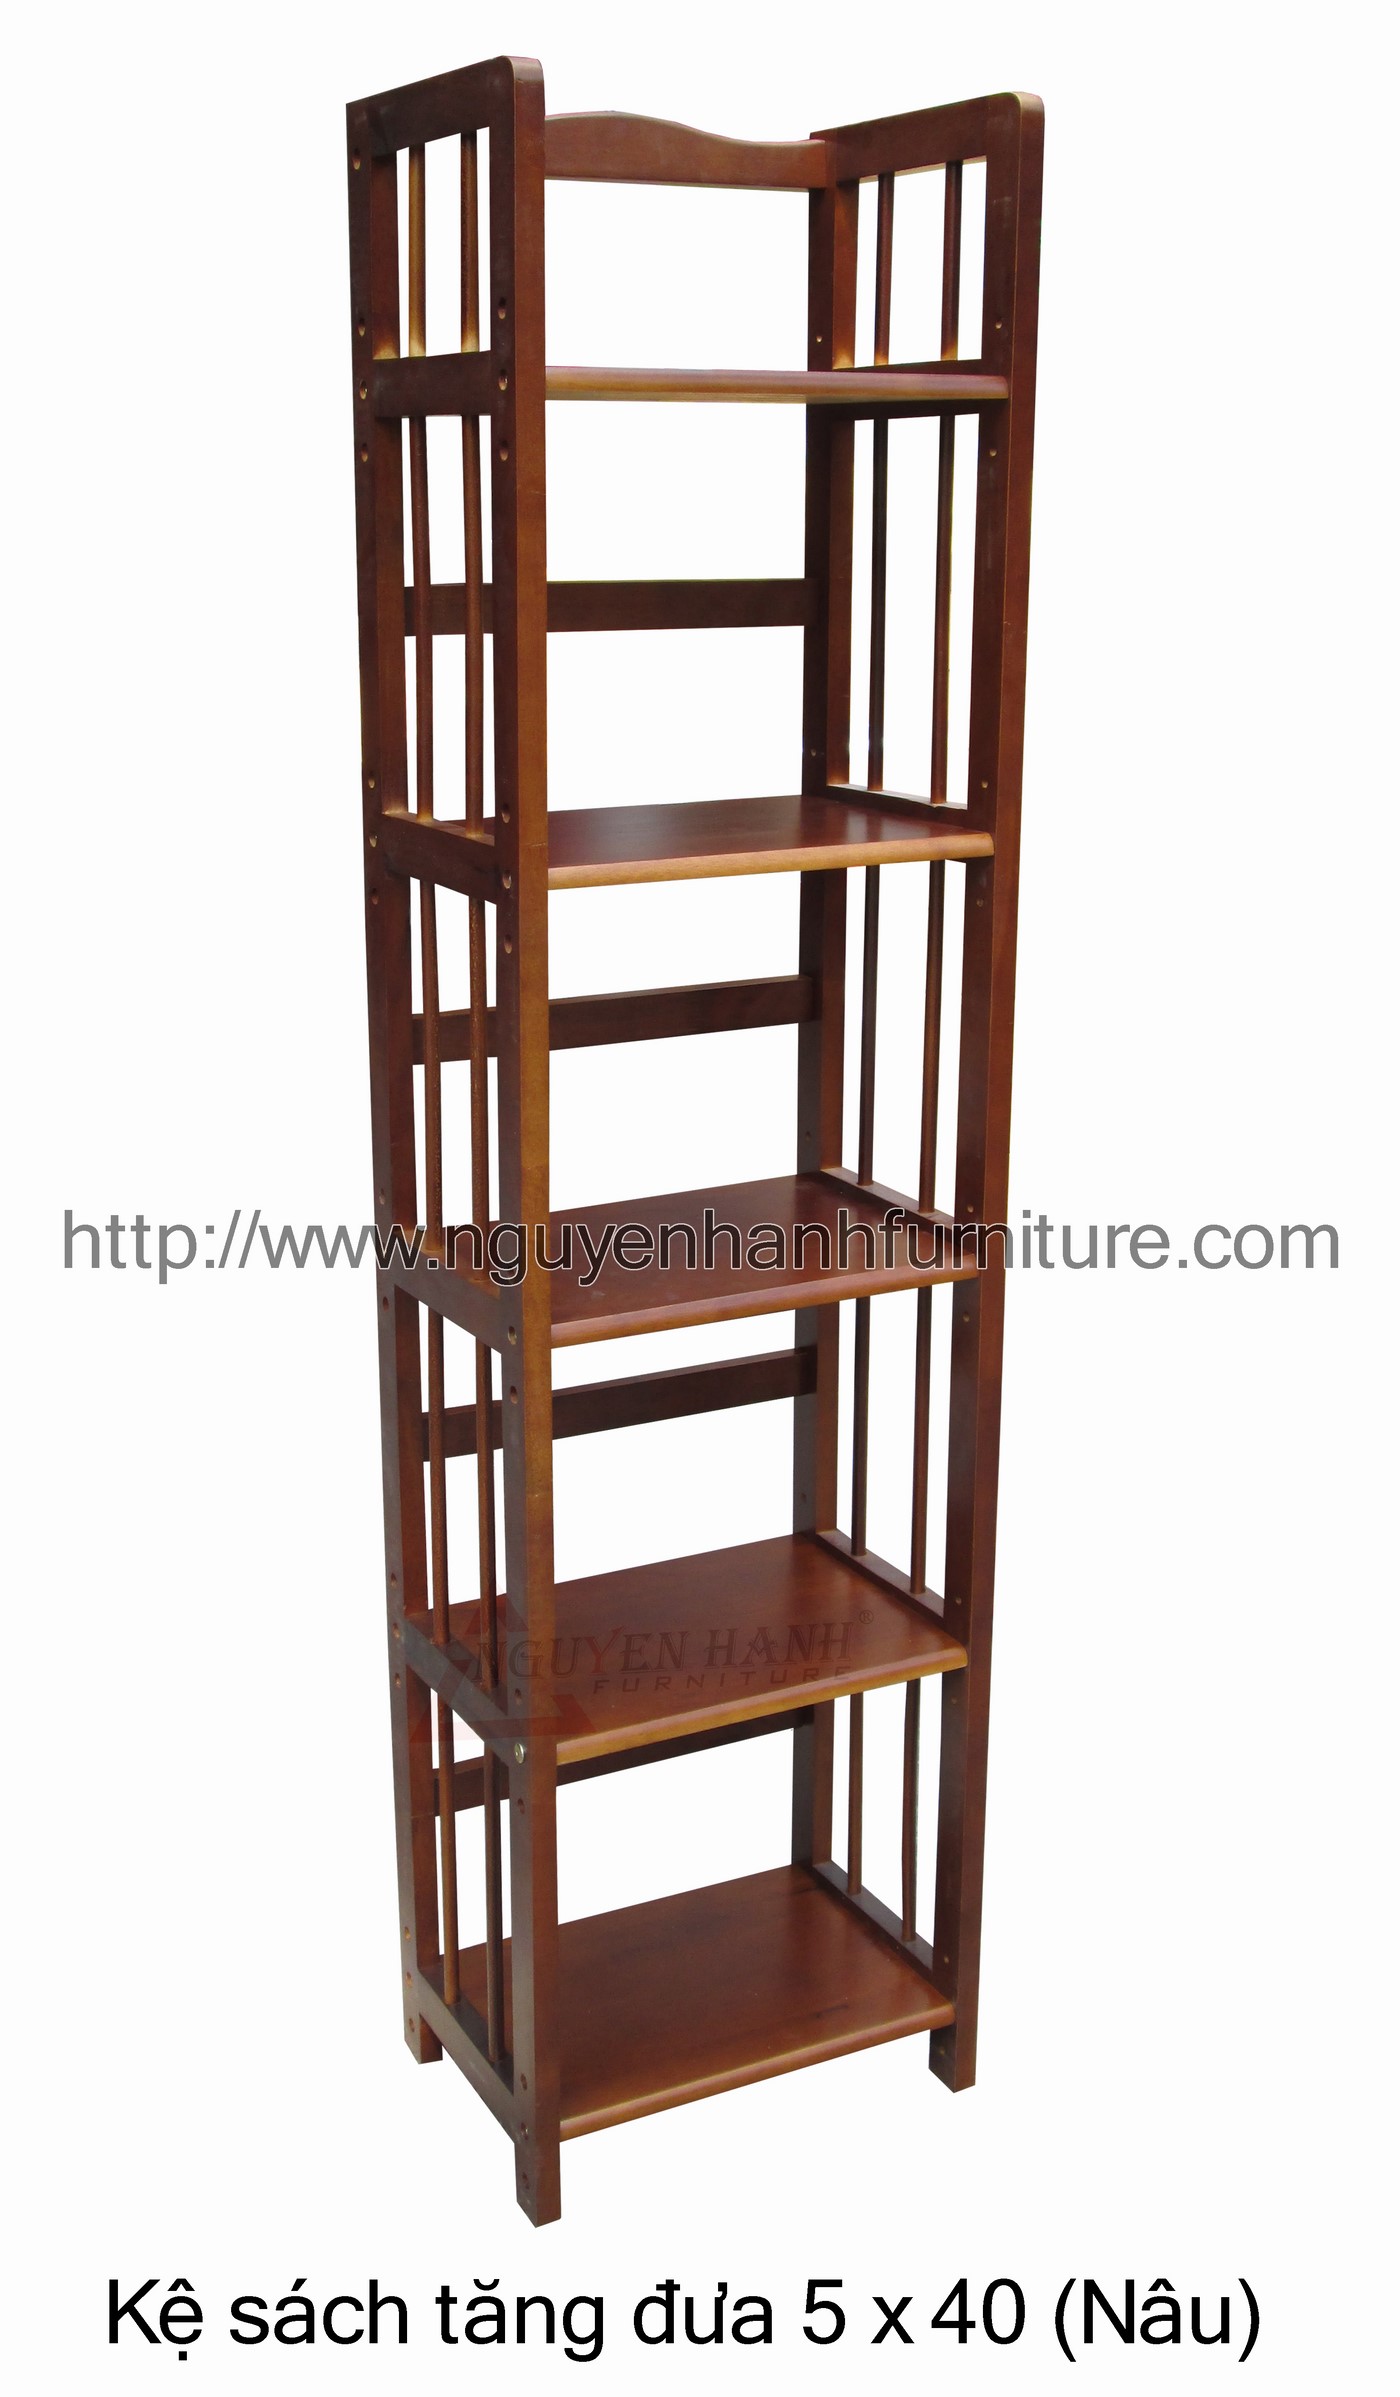 Name product: 5 storey Adjustable Bookshelf 40 (Brown) - Dimensions: 40 x 28 x 157 (H) - Description: Wood natural rubber